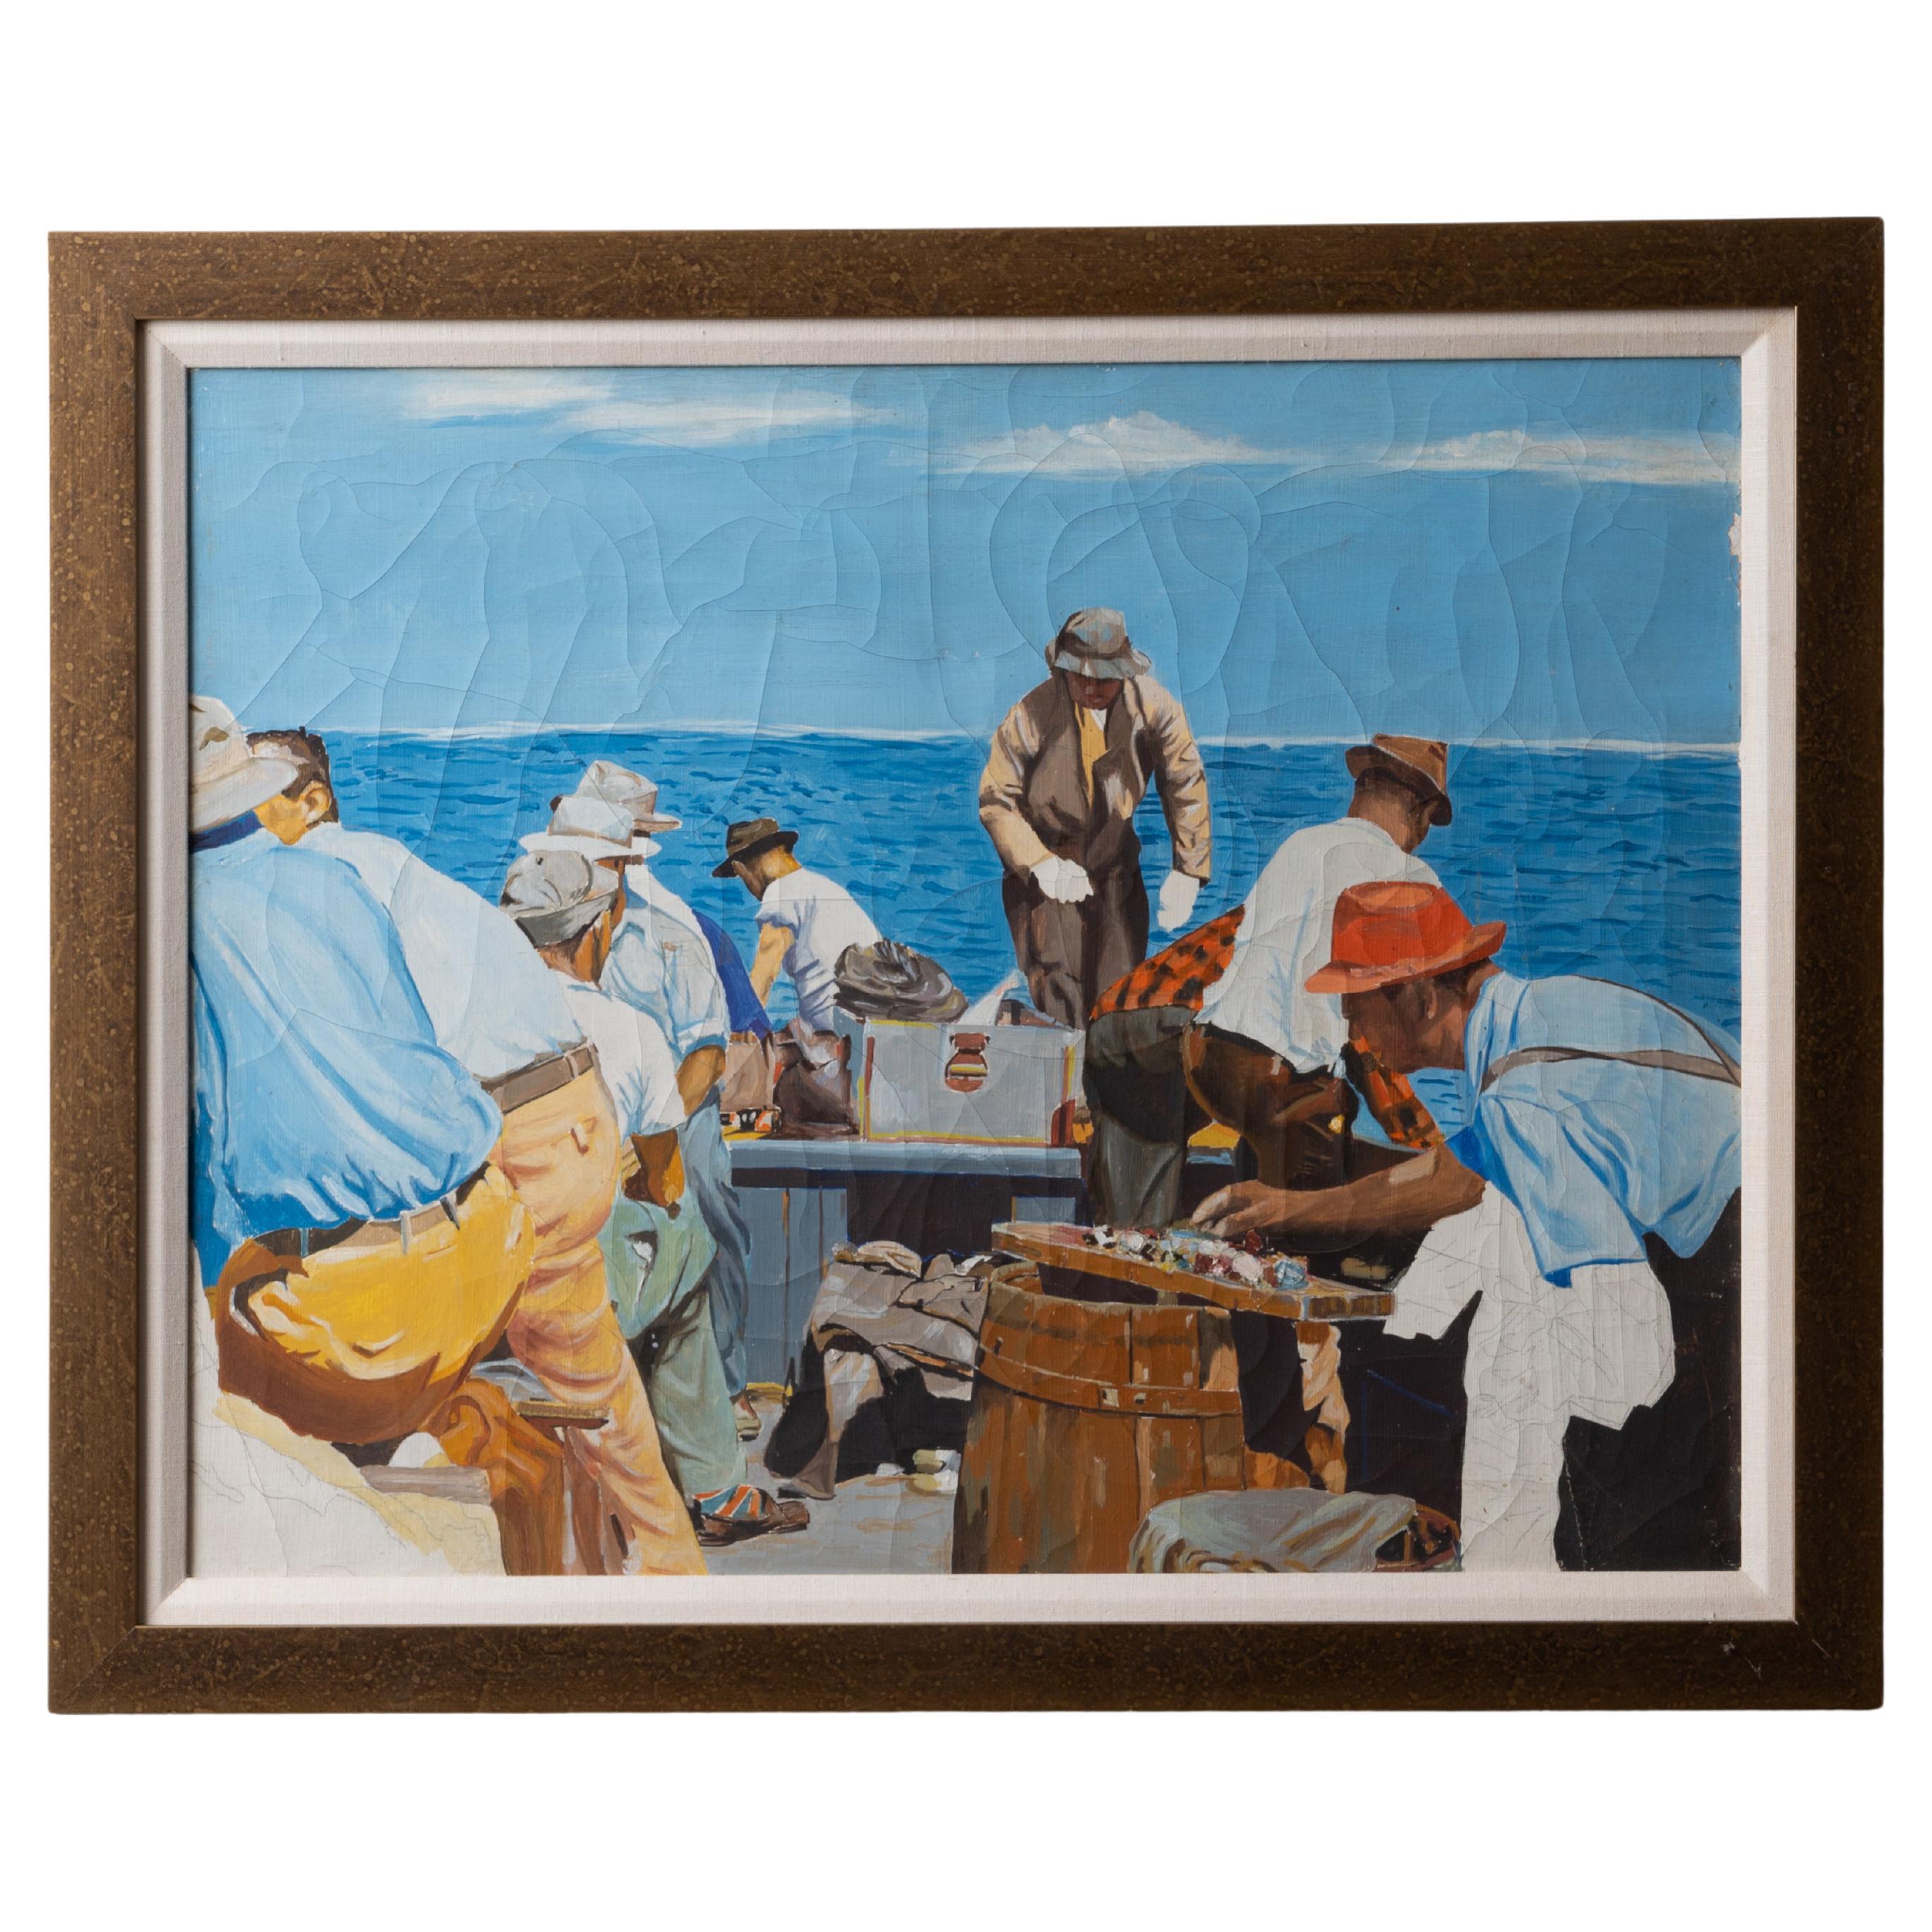 Fisherman Oil on Canvas